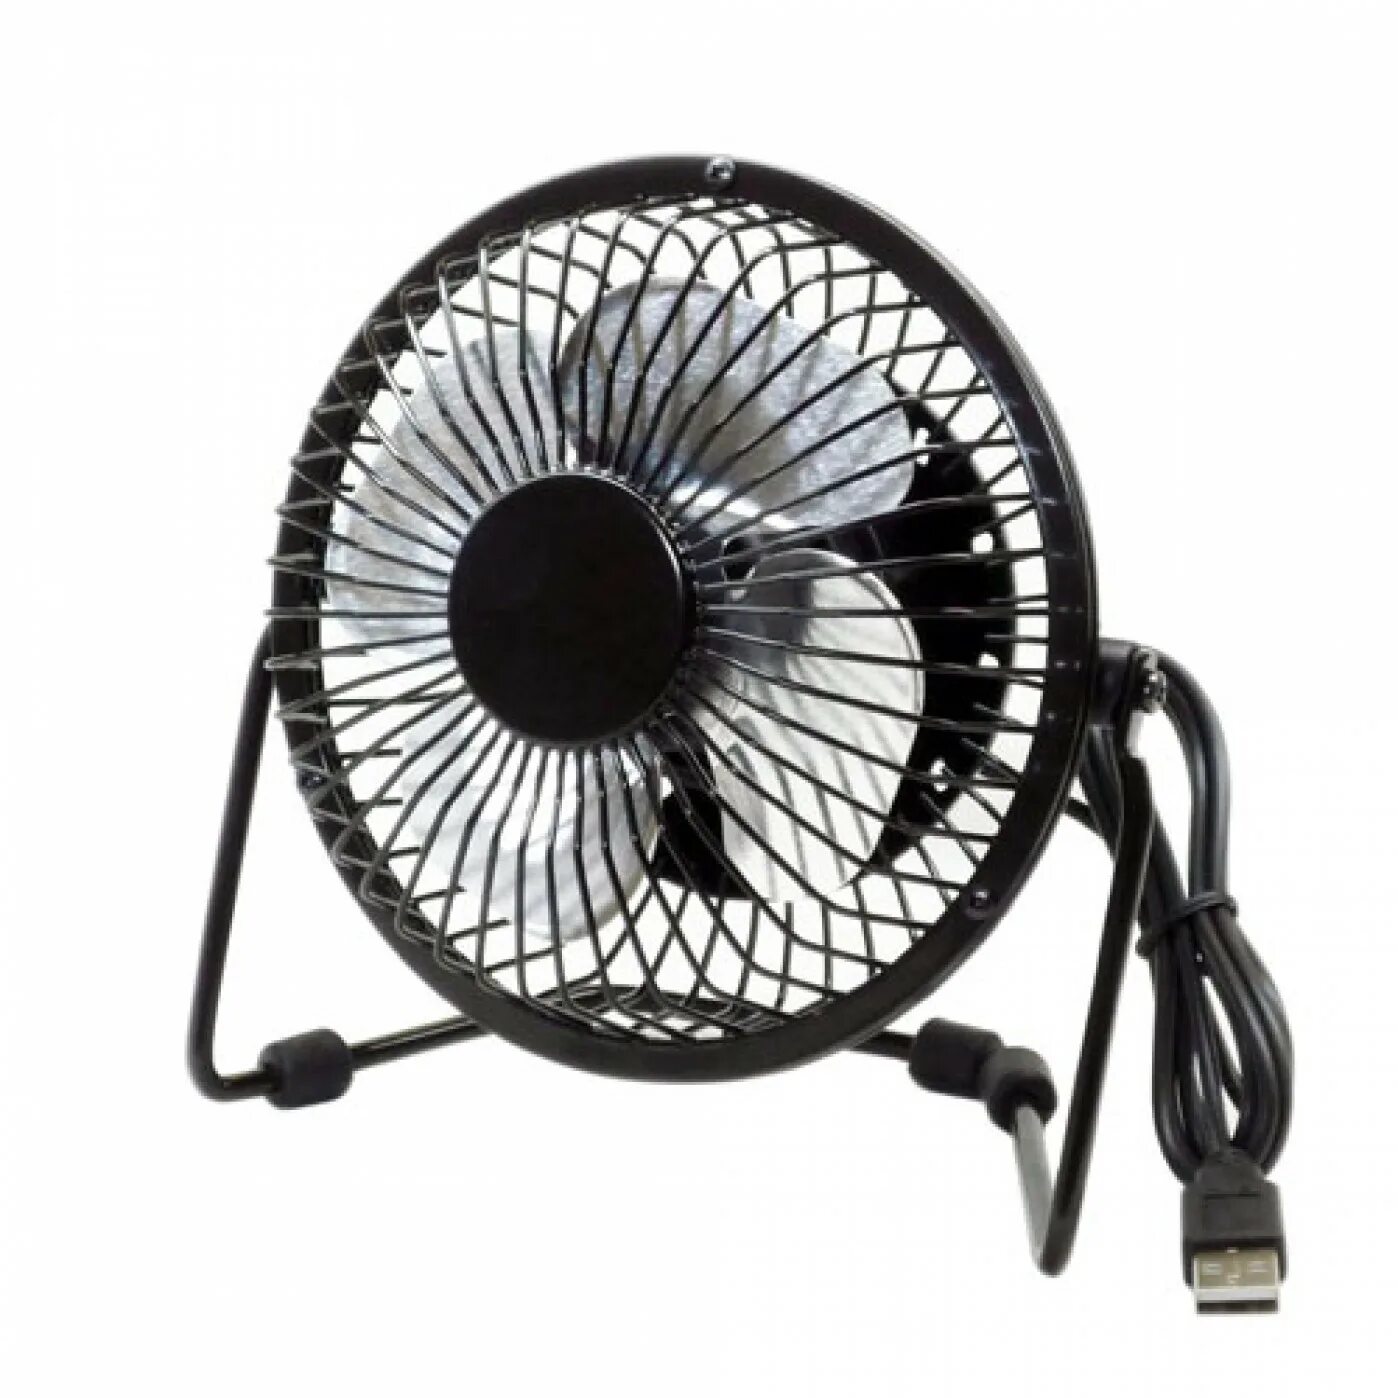 Fan usb. Вентилятор USB (Black) (5v,1w). USB вентилятор Jet.a f-01. Вентилятор desktop Fan. Мини USB вентилятор Mini Fan.